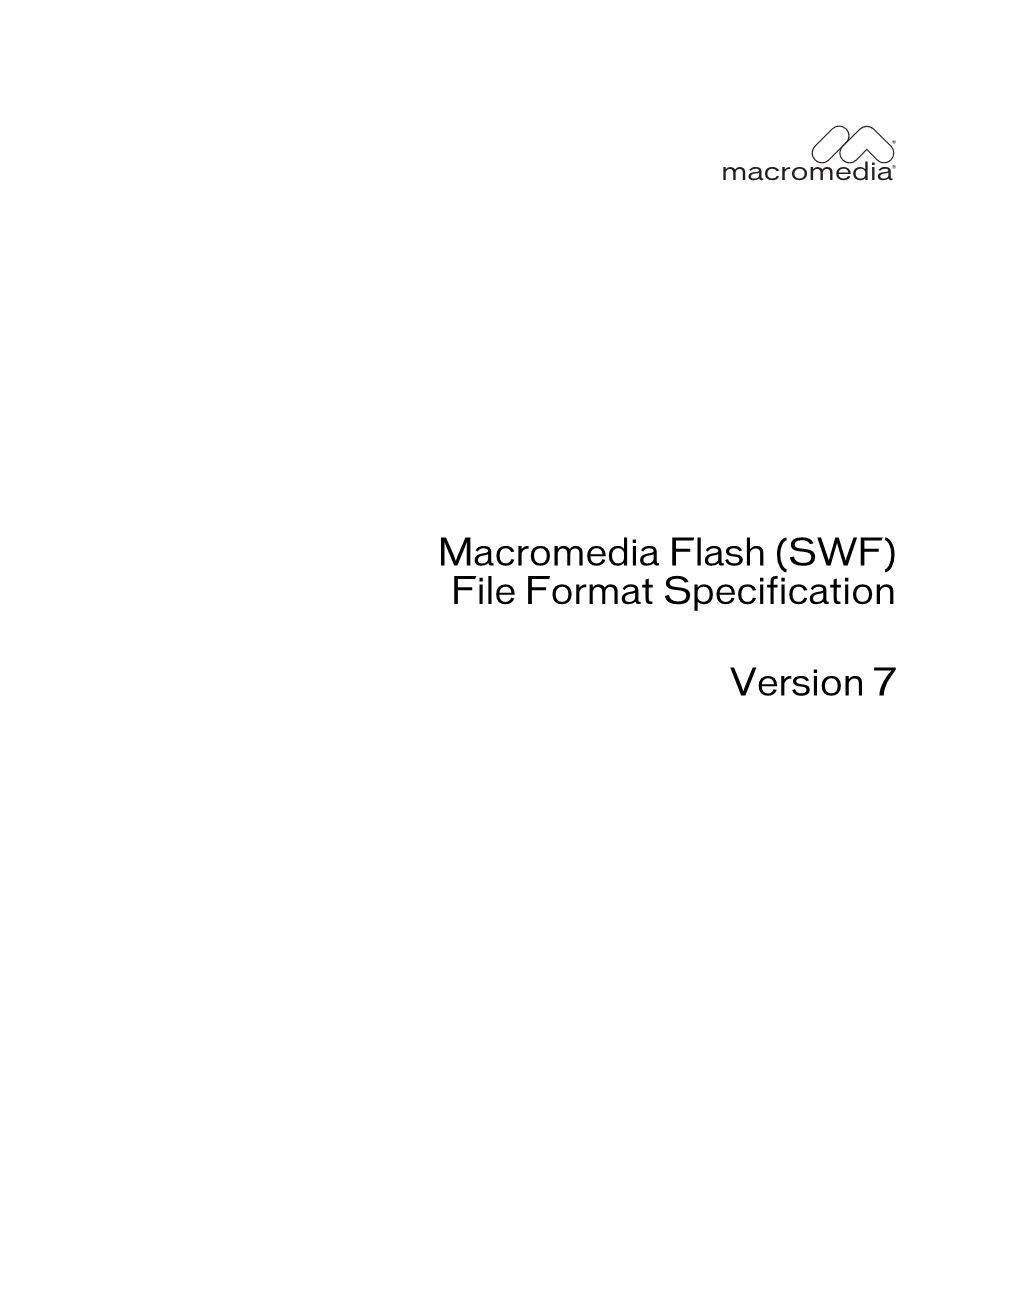 Macromedia Flash (SWF) File Format Specification, Version 7